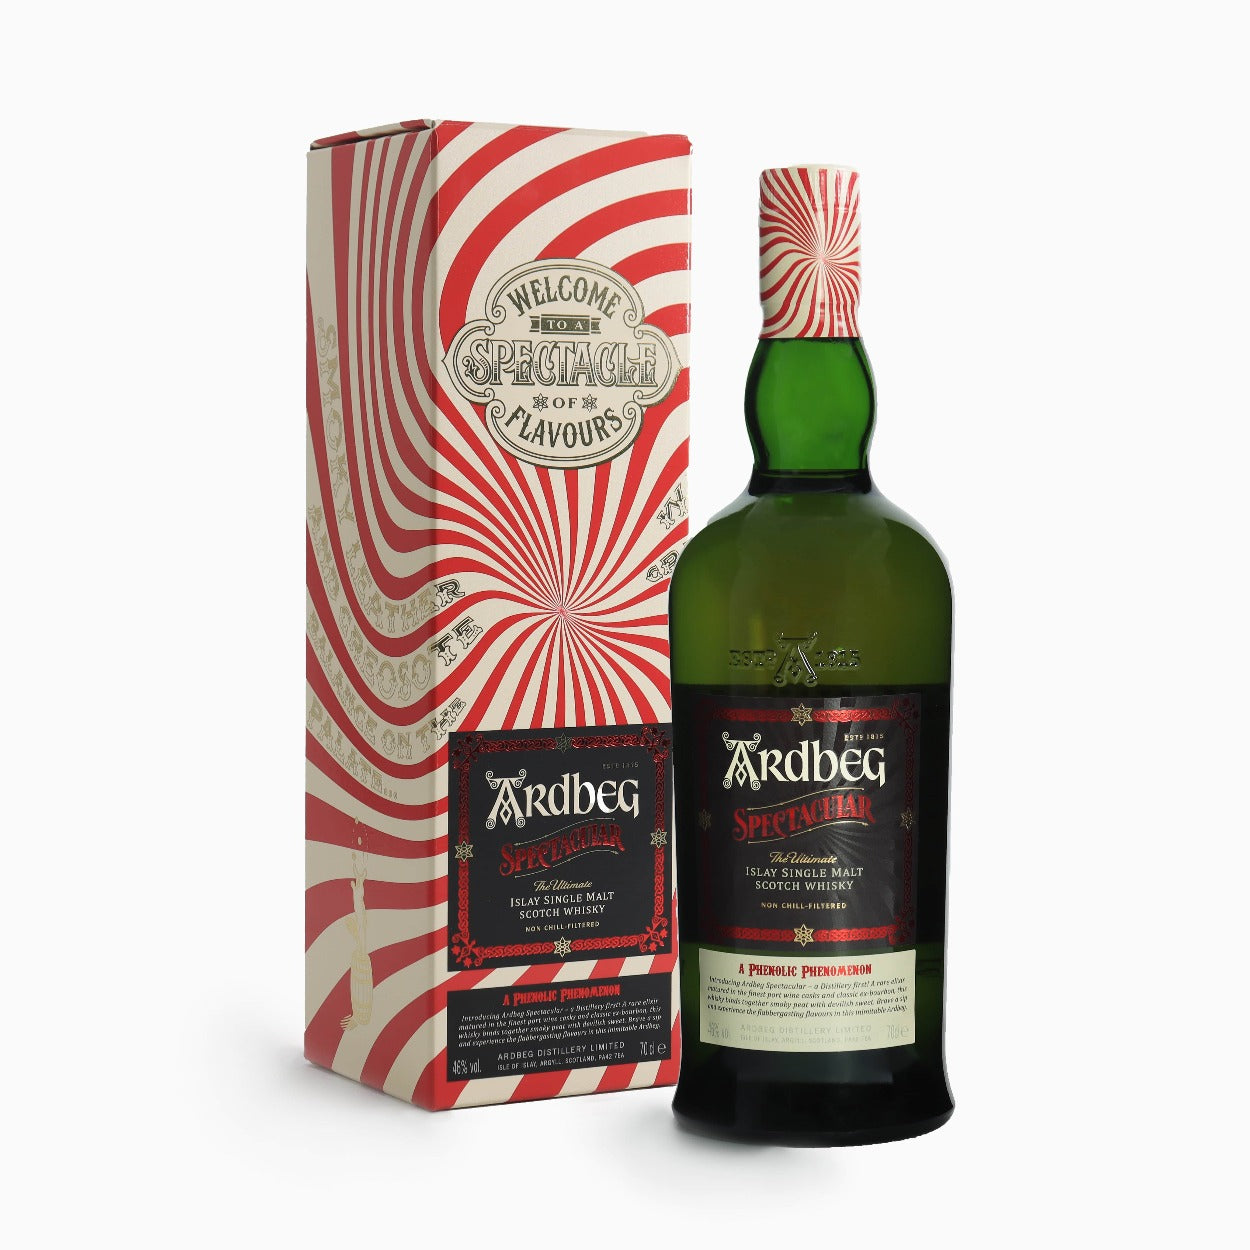 Image of Ardbeg Spectacular Limited Edition Single Malt Scotch Whisky, Islay, Scotland